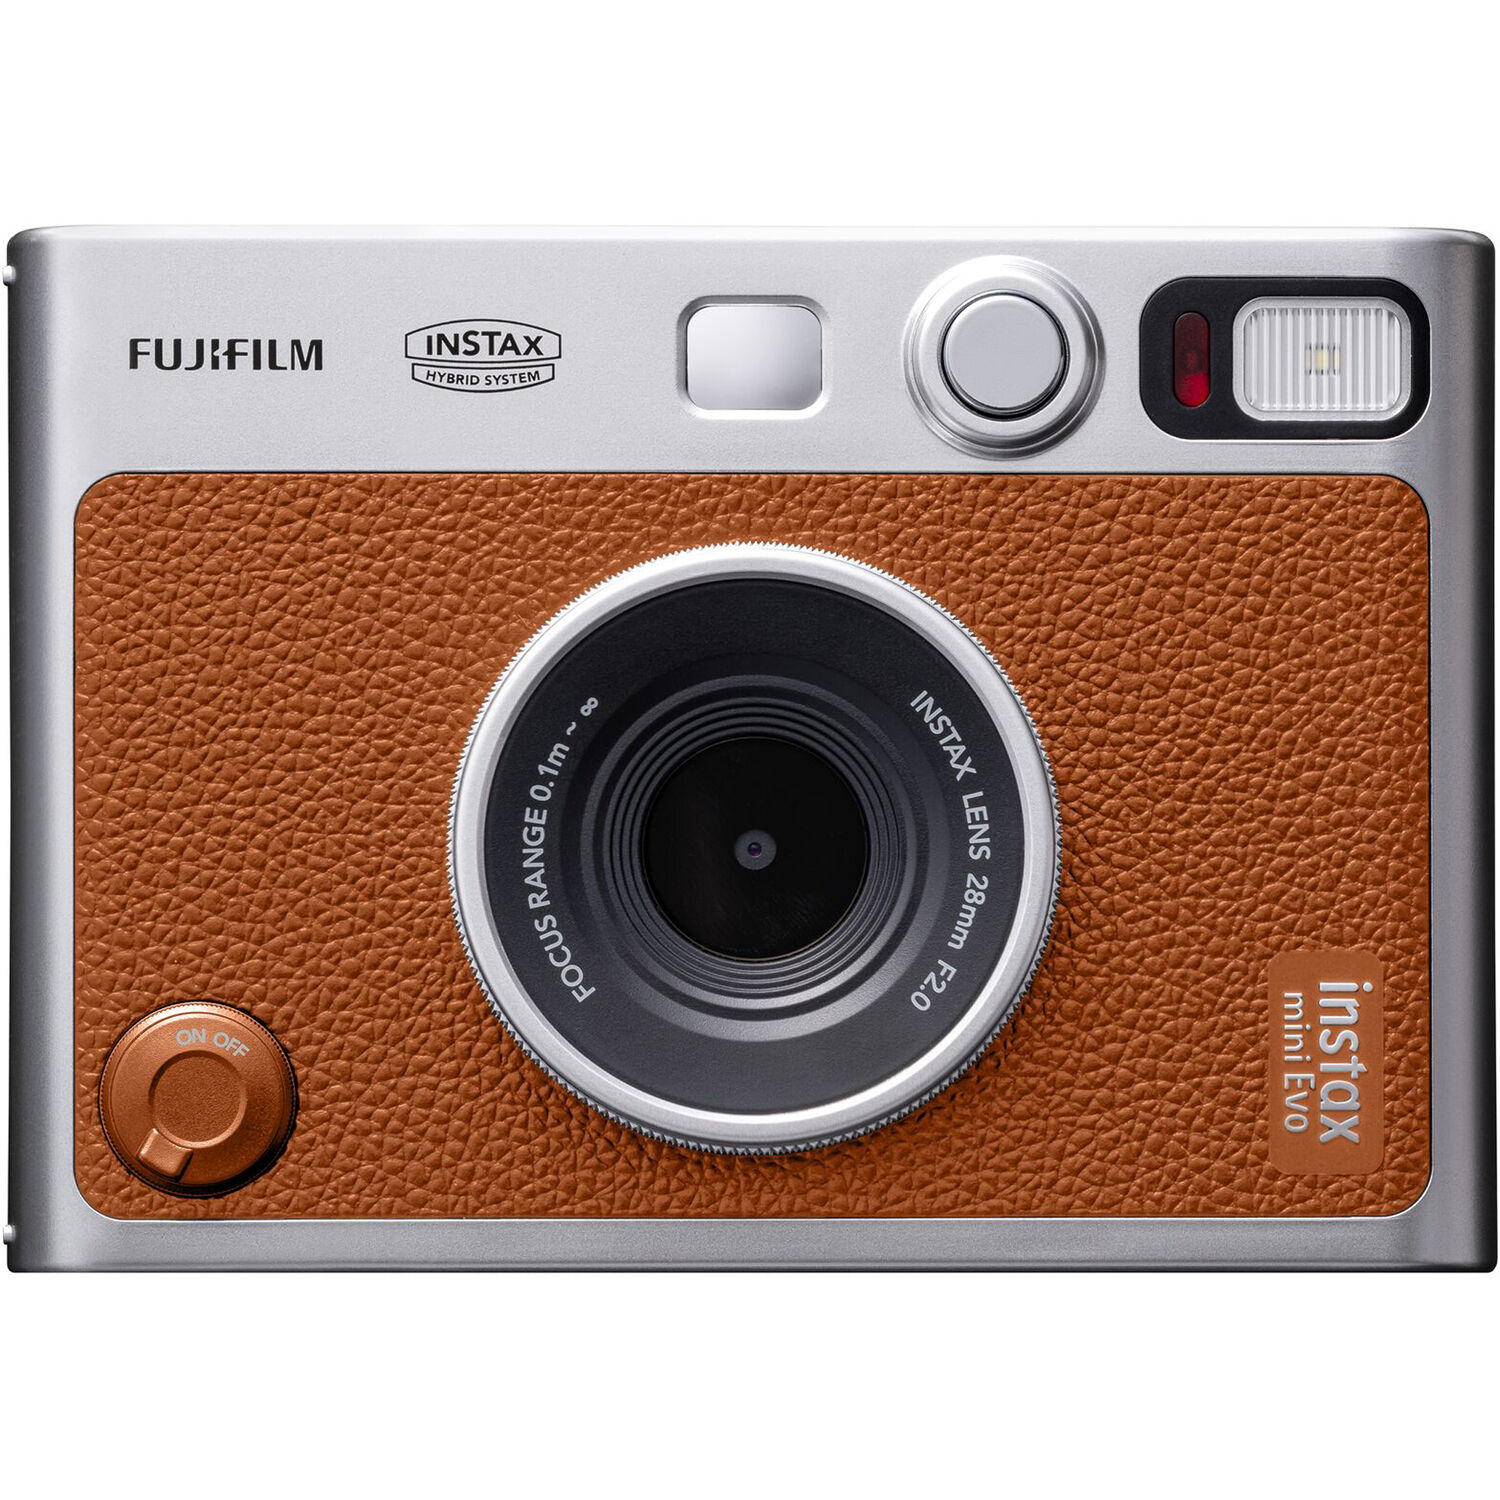 Fujifilm Instax Mini Evo Review: Where Digital Meets Film